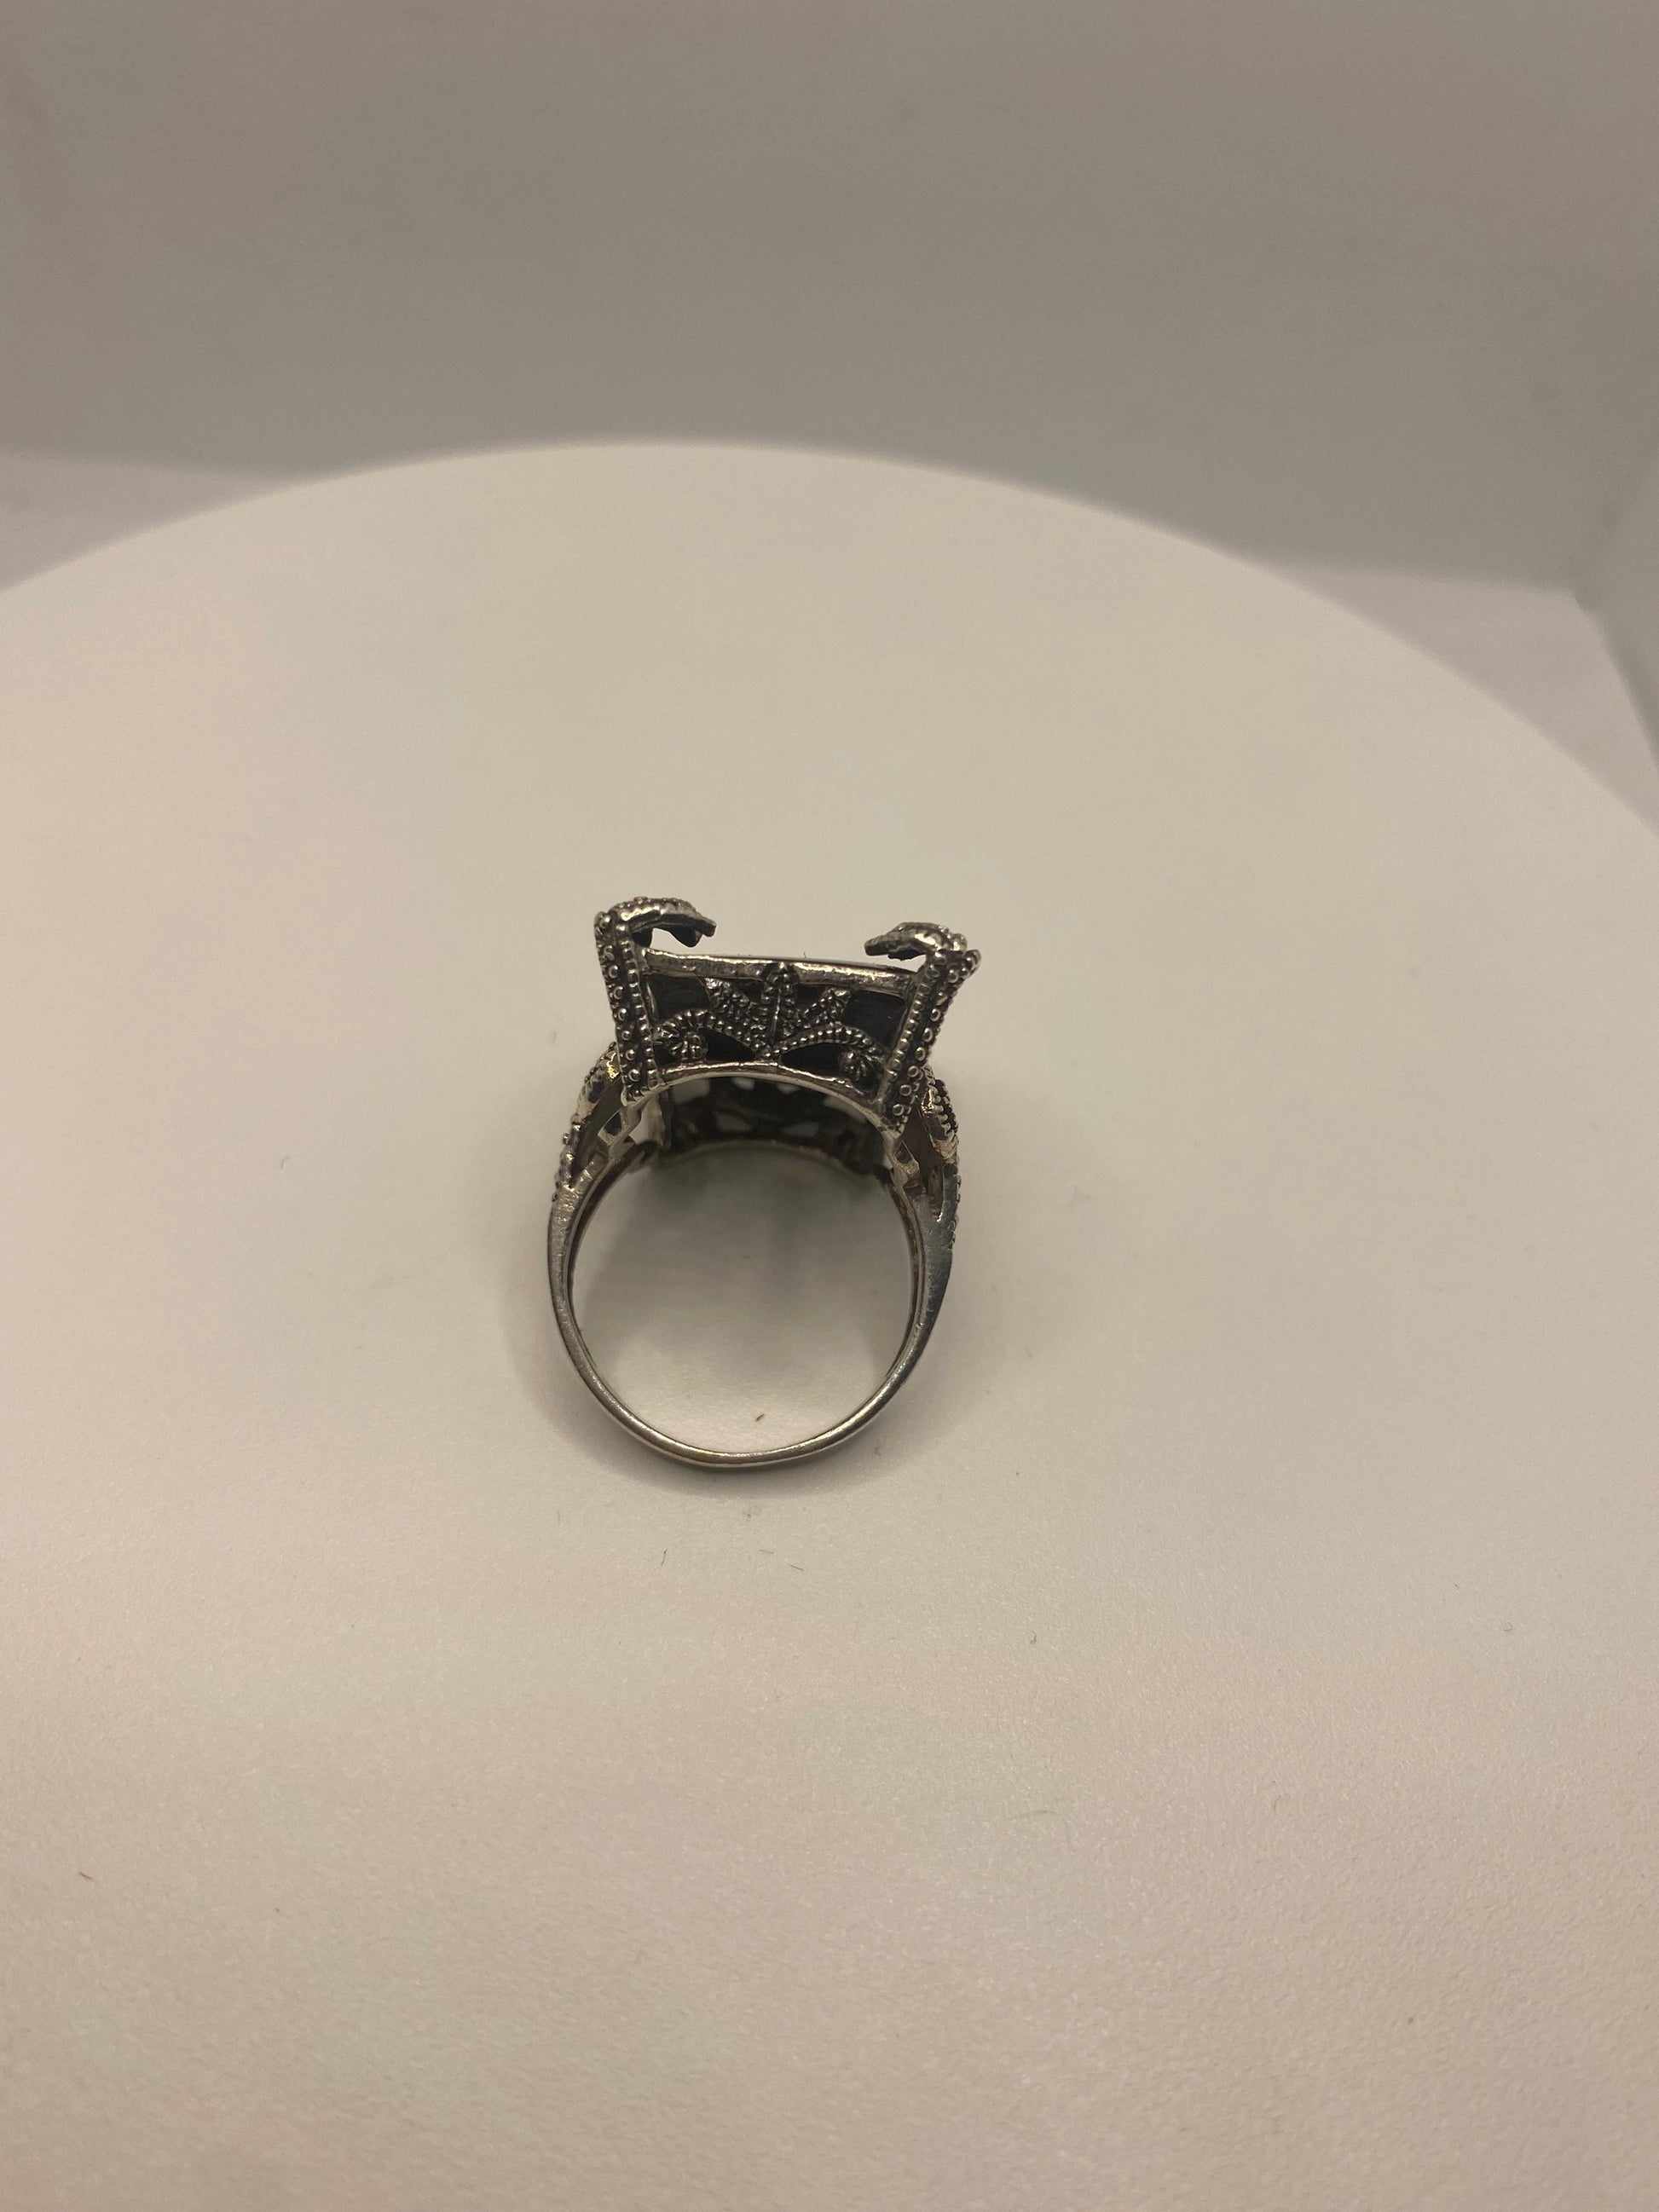 Vintage Genuine Black Onyx Silver marcasite Ring